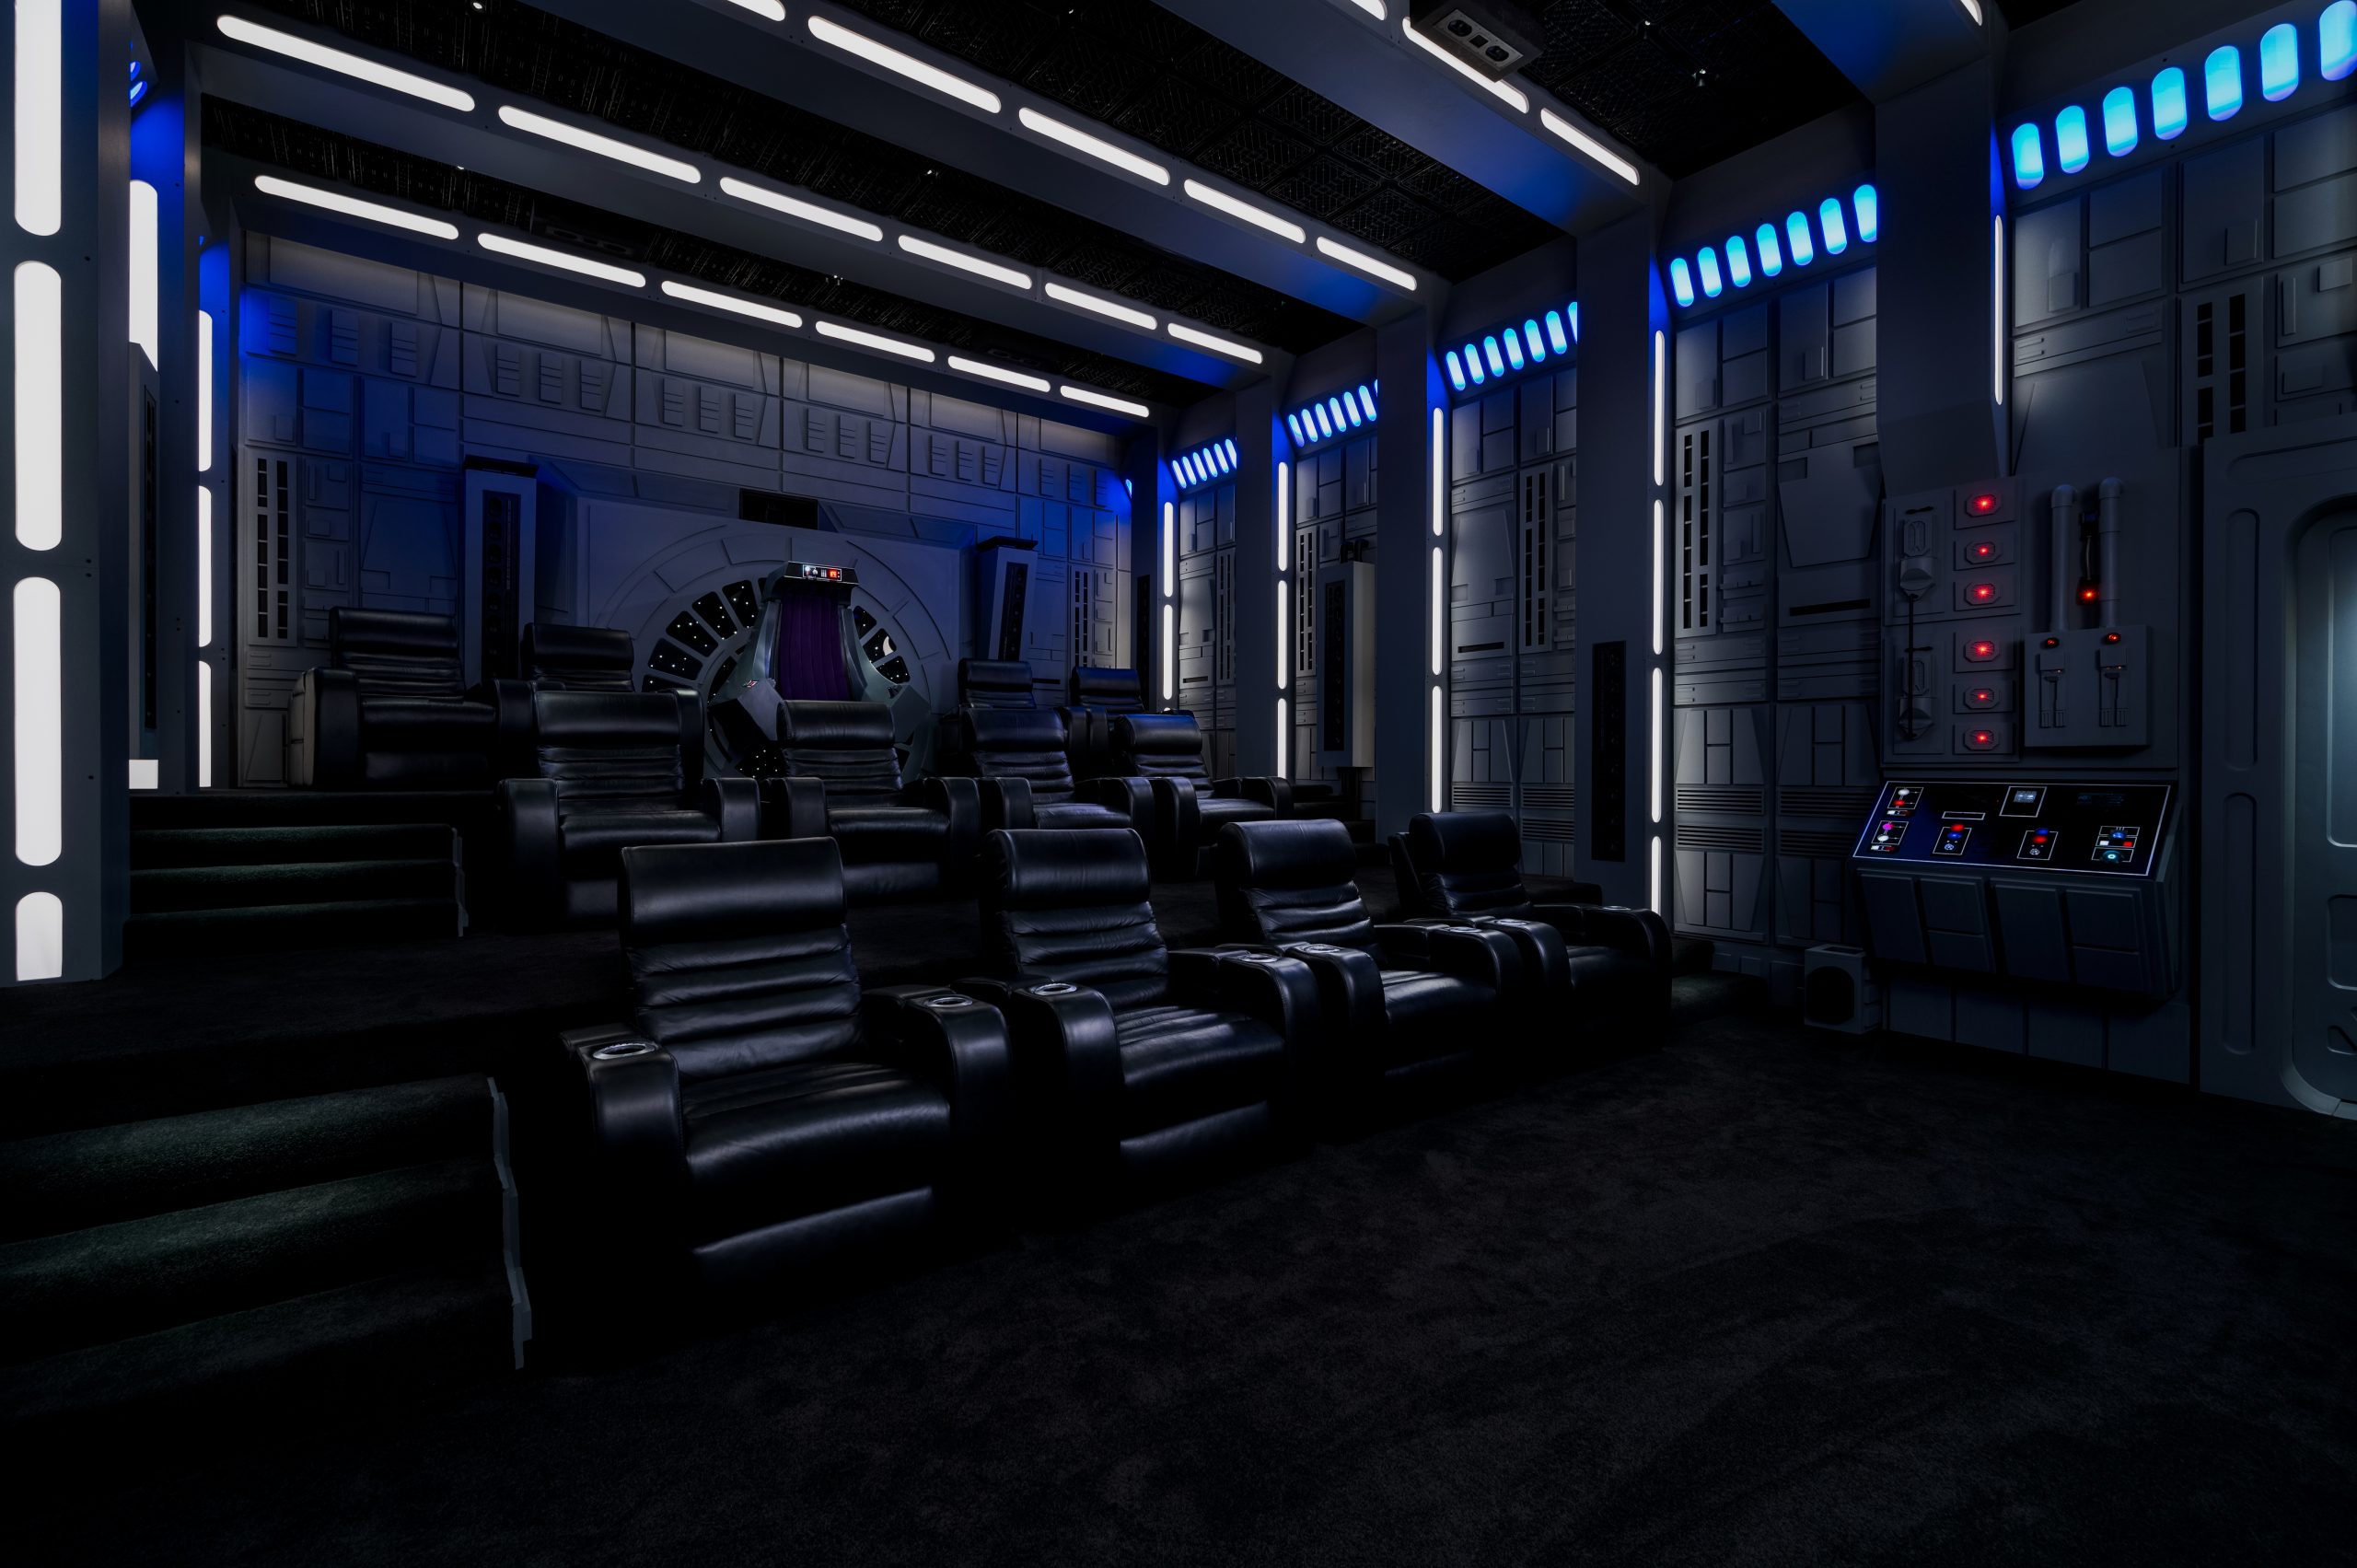 Star Wars Theater